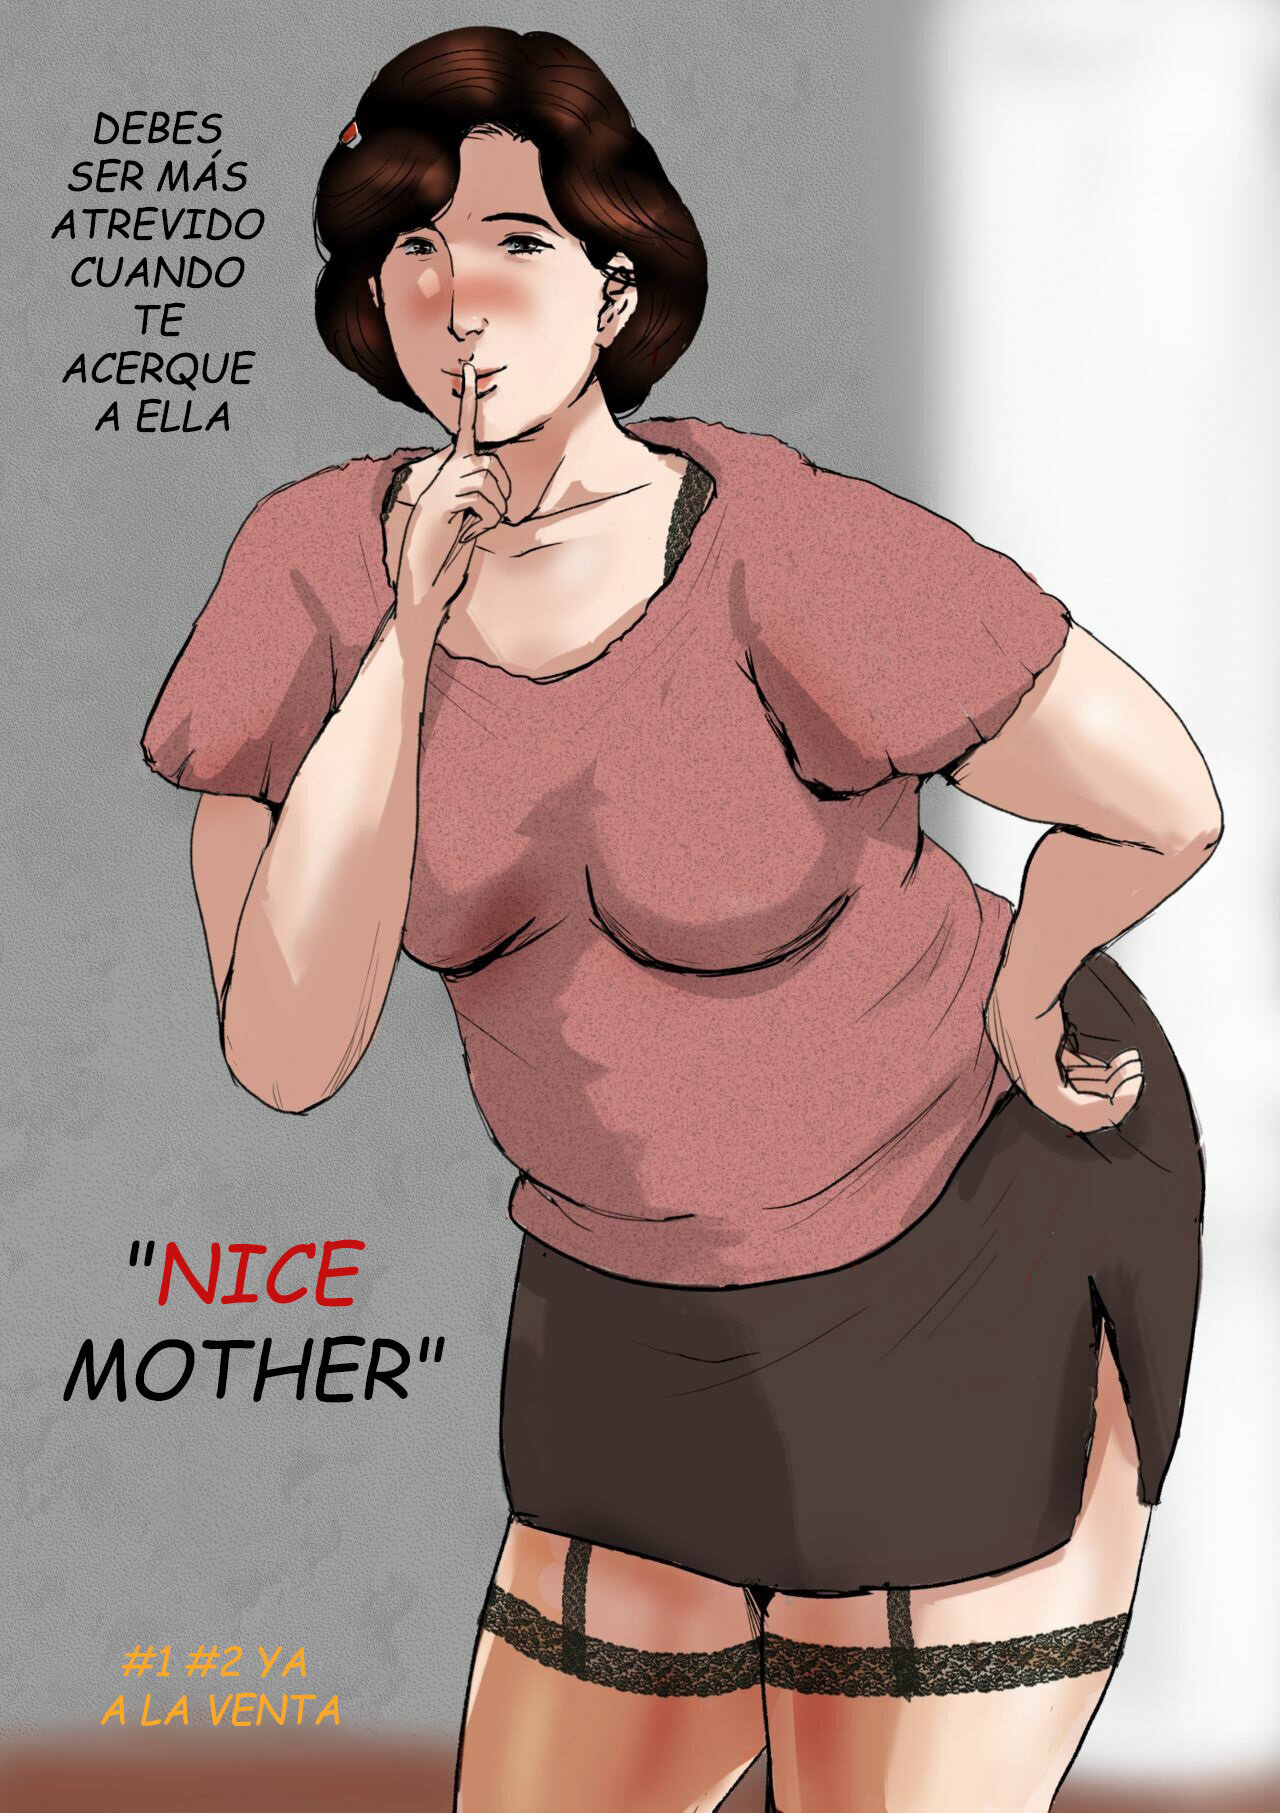 oozora kaiko Revista de incesto de madre a hijo Nice Mother No3 - 50